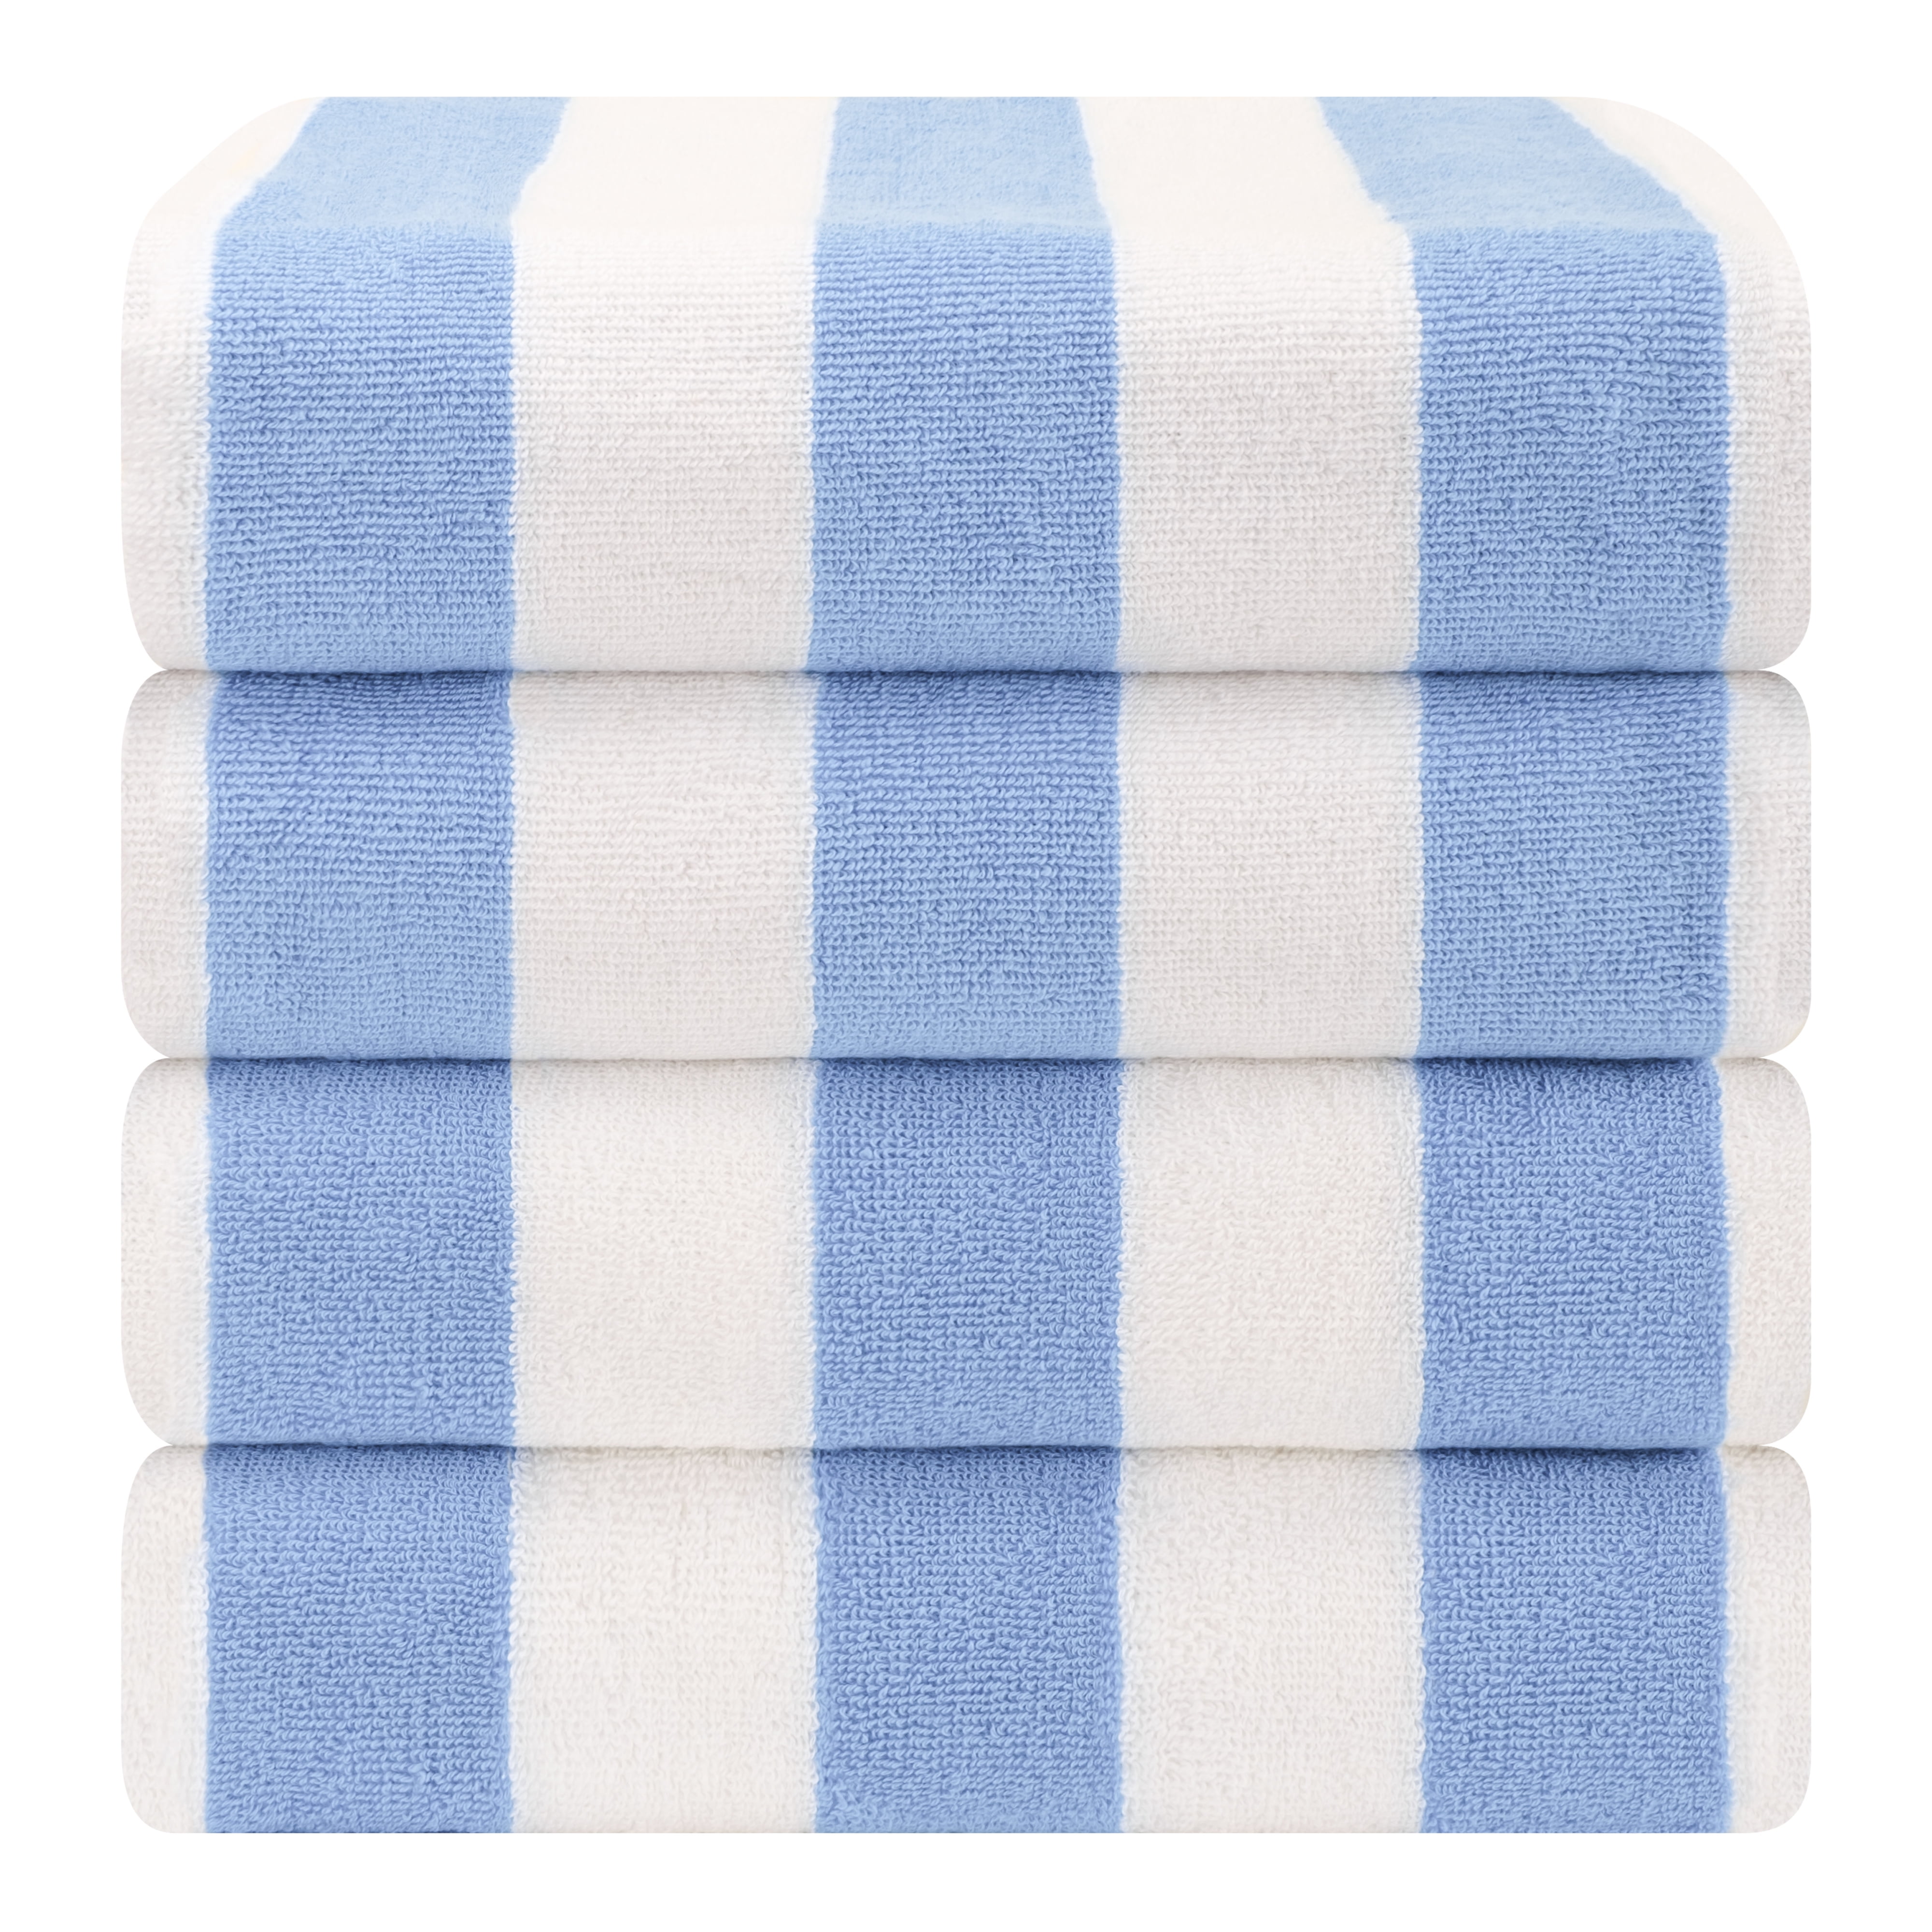 Chakir Turkish Linens Premium Quality 100% Cotton Turkish Cabana Thick  Stripe Pool Beach Towels 4-Pack (Light Blue, 30x60 Inch)